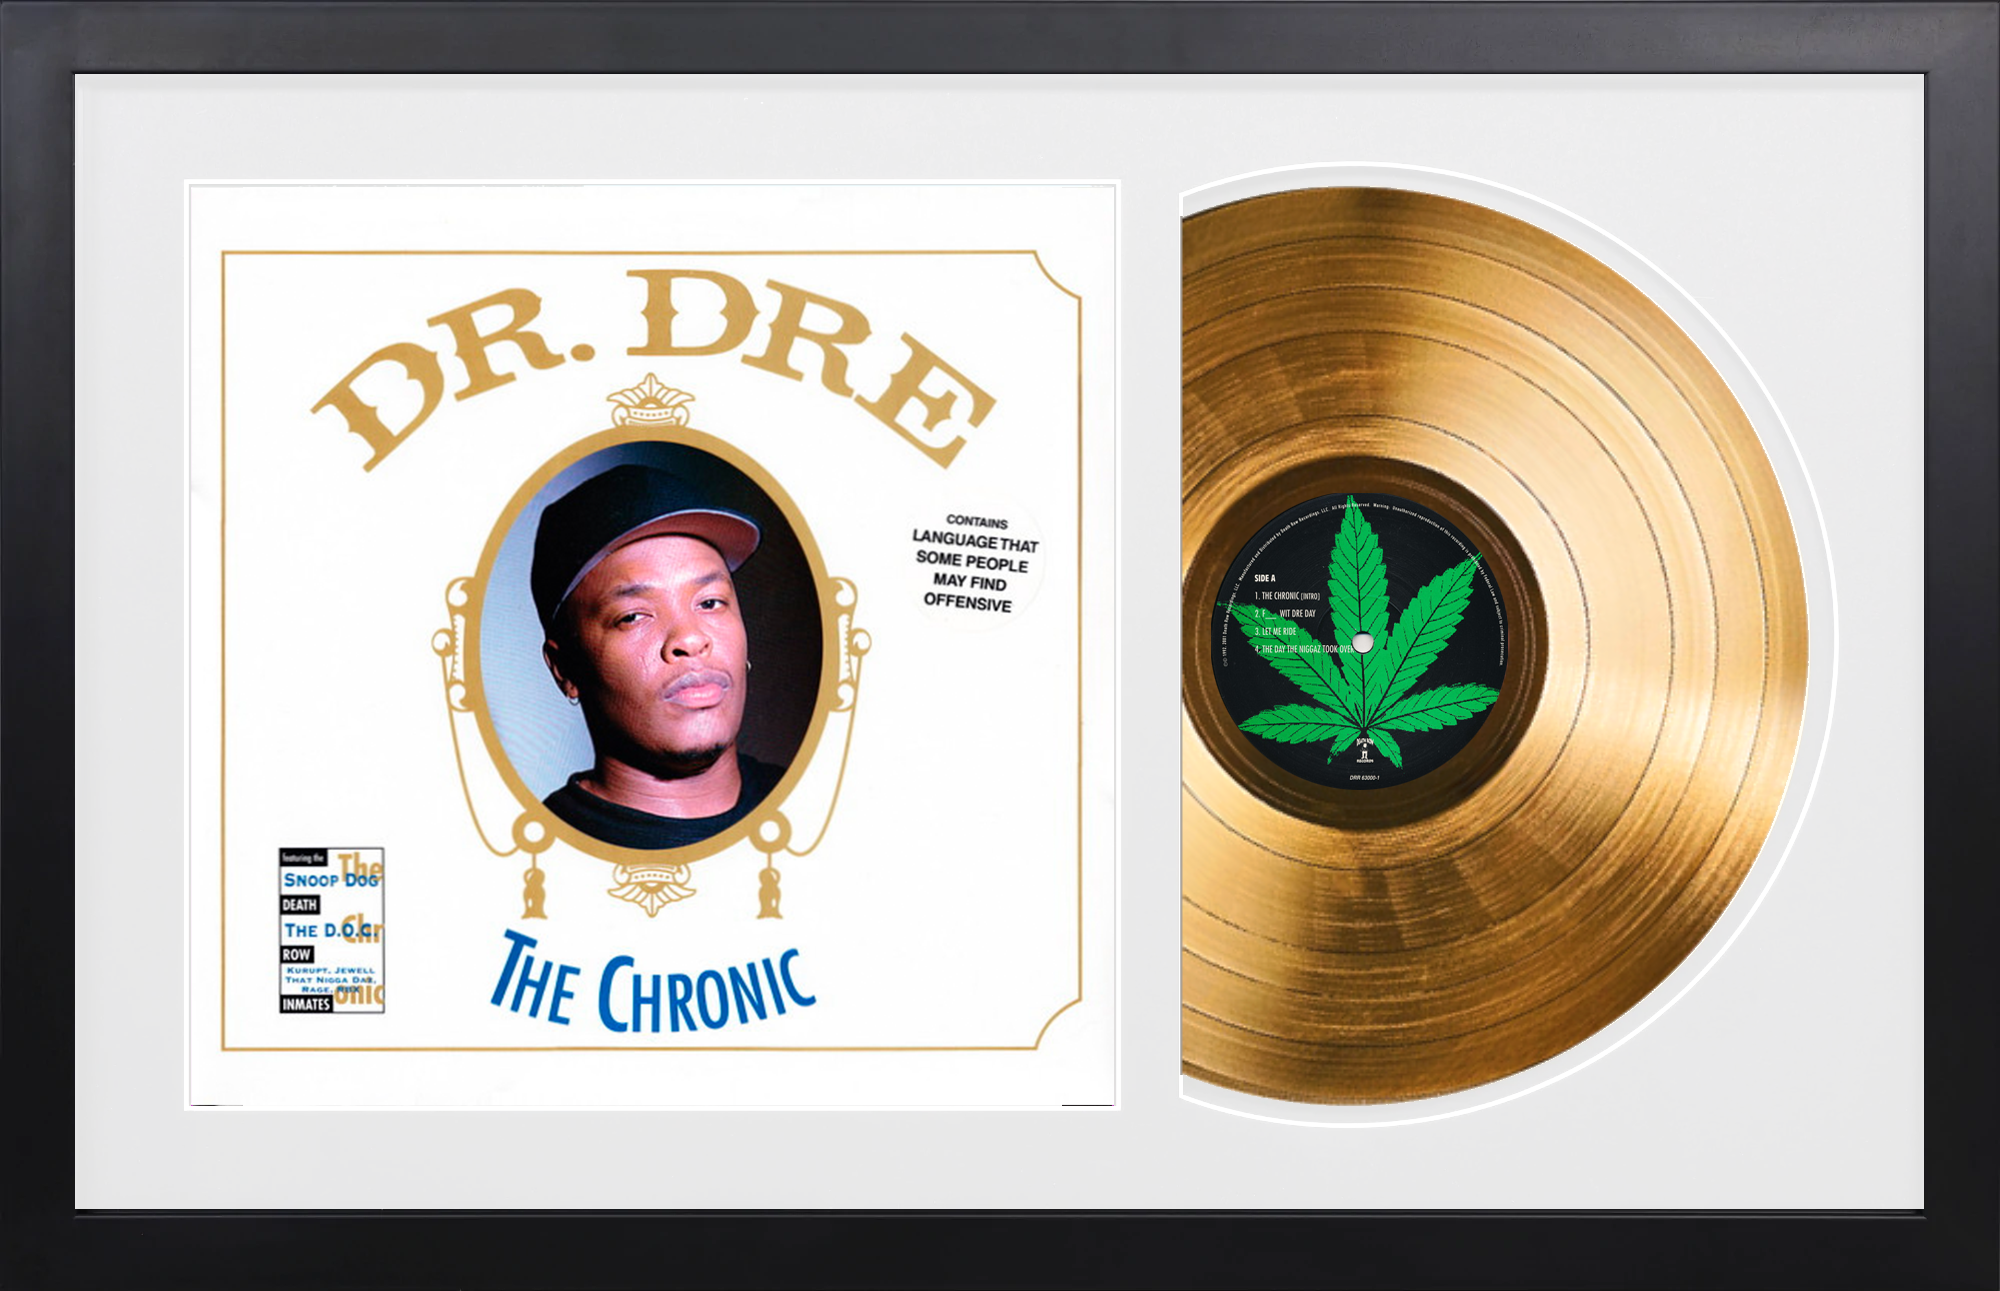 Dr. Dre - 2001 Gold LP Limited Signature Edition Custom Frame